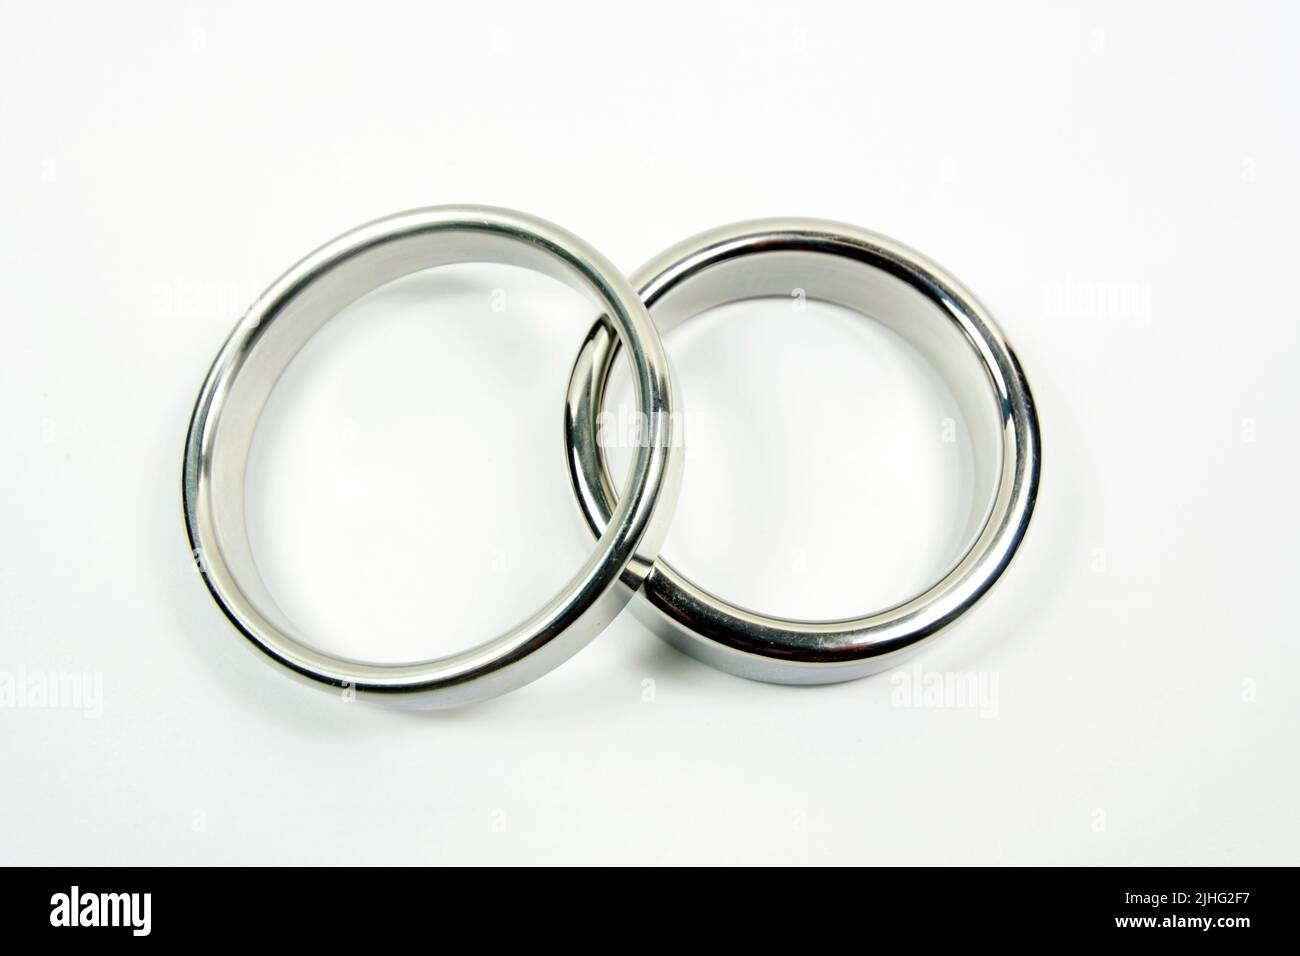 Steel Ring rings. Stock Photo